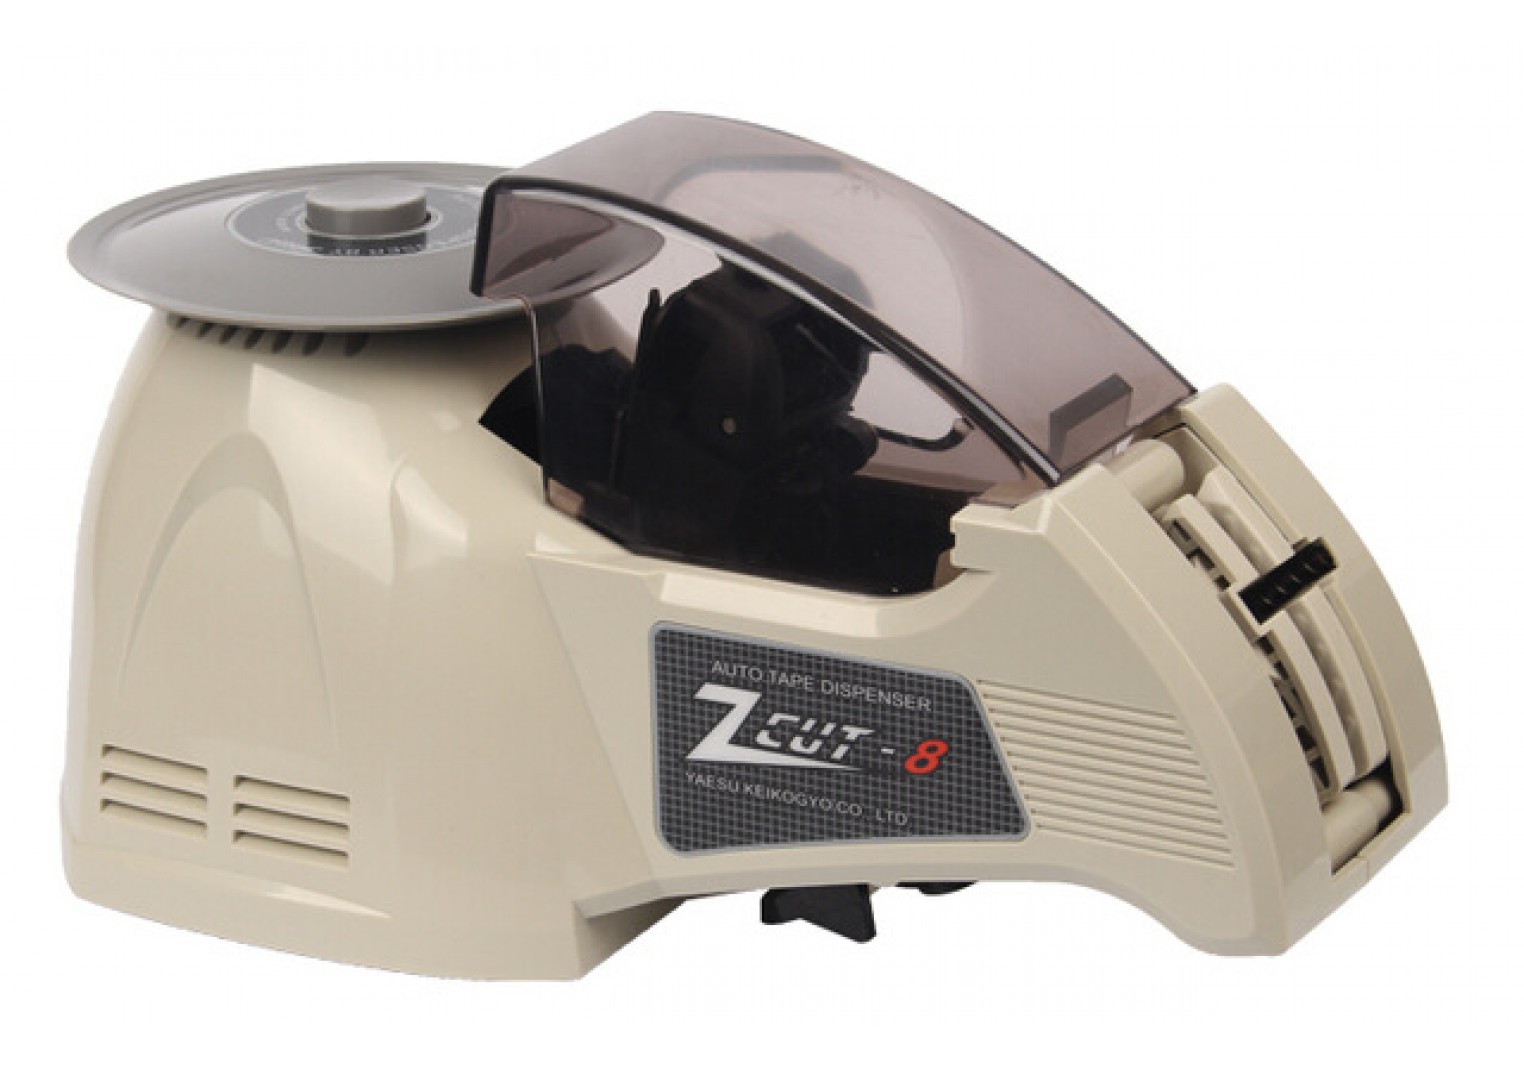 ZCUT-8 Yeasu Tape Cutting Machine